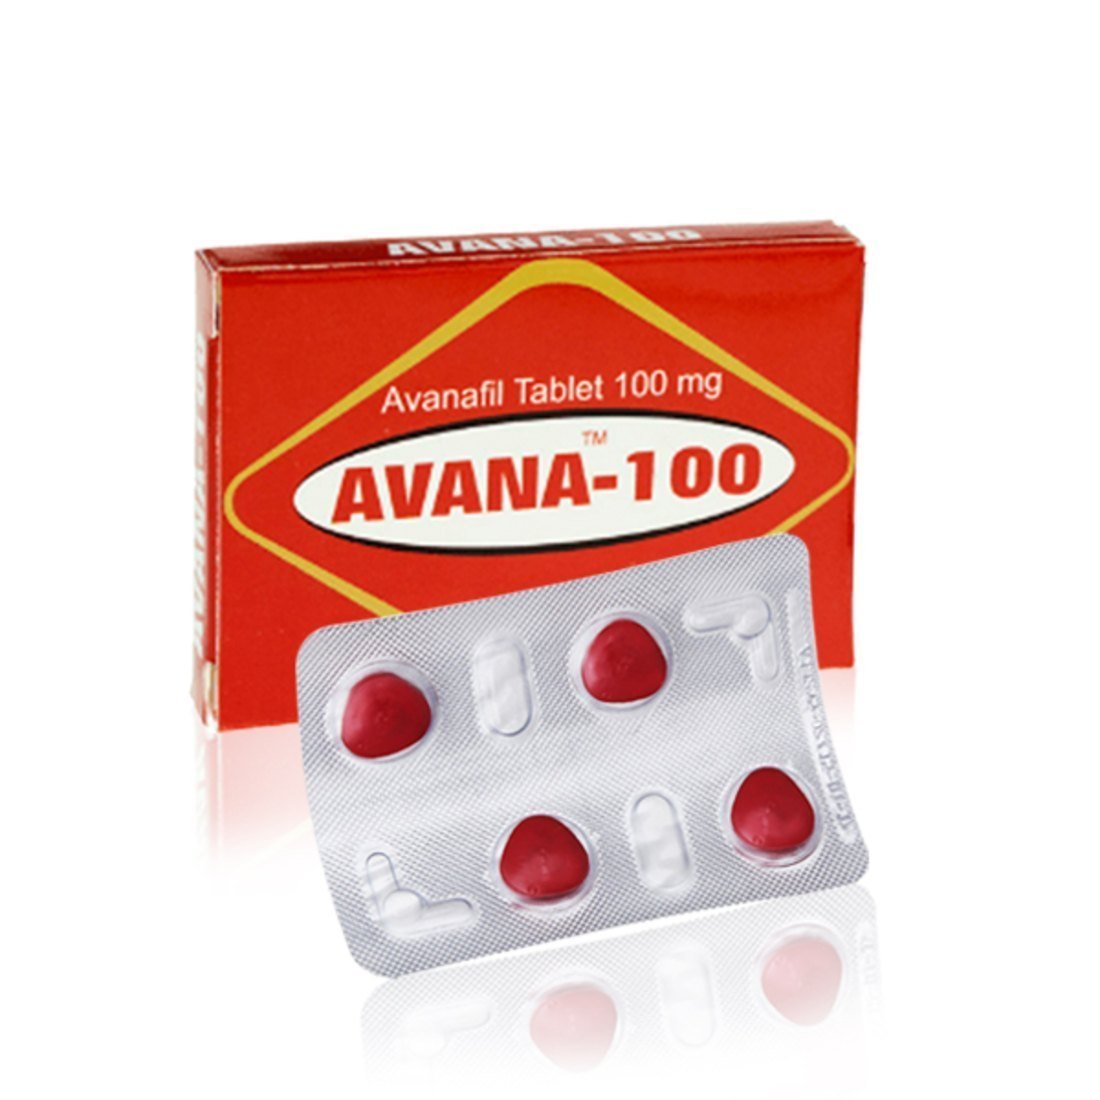 avana-100-mg